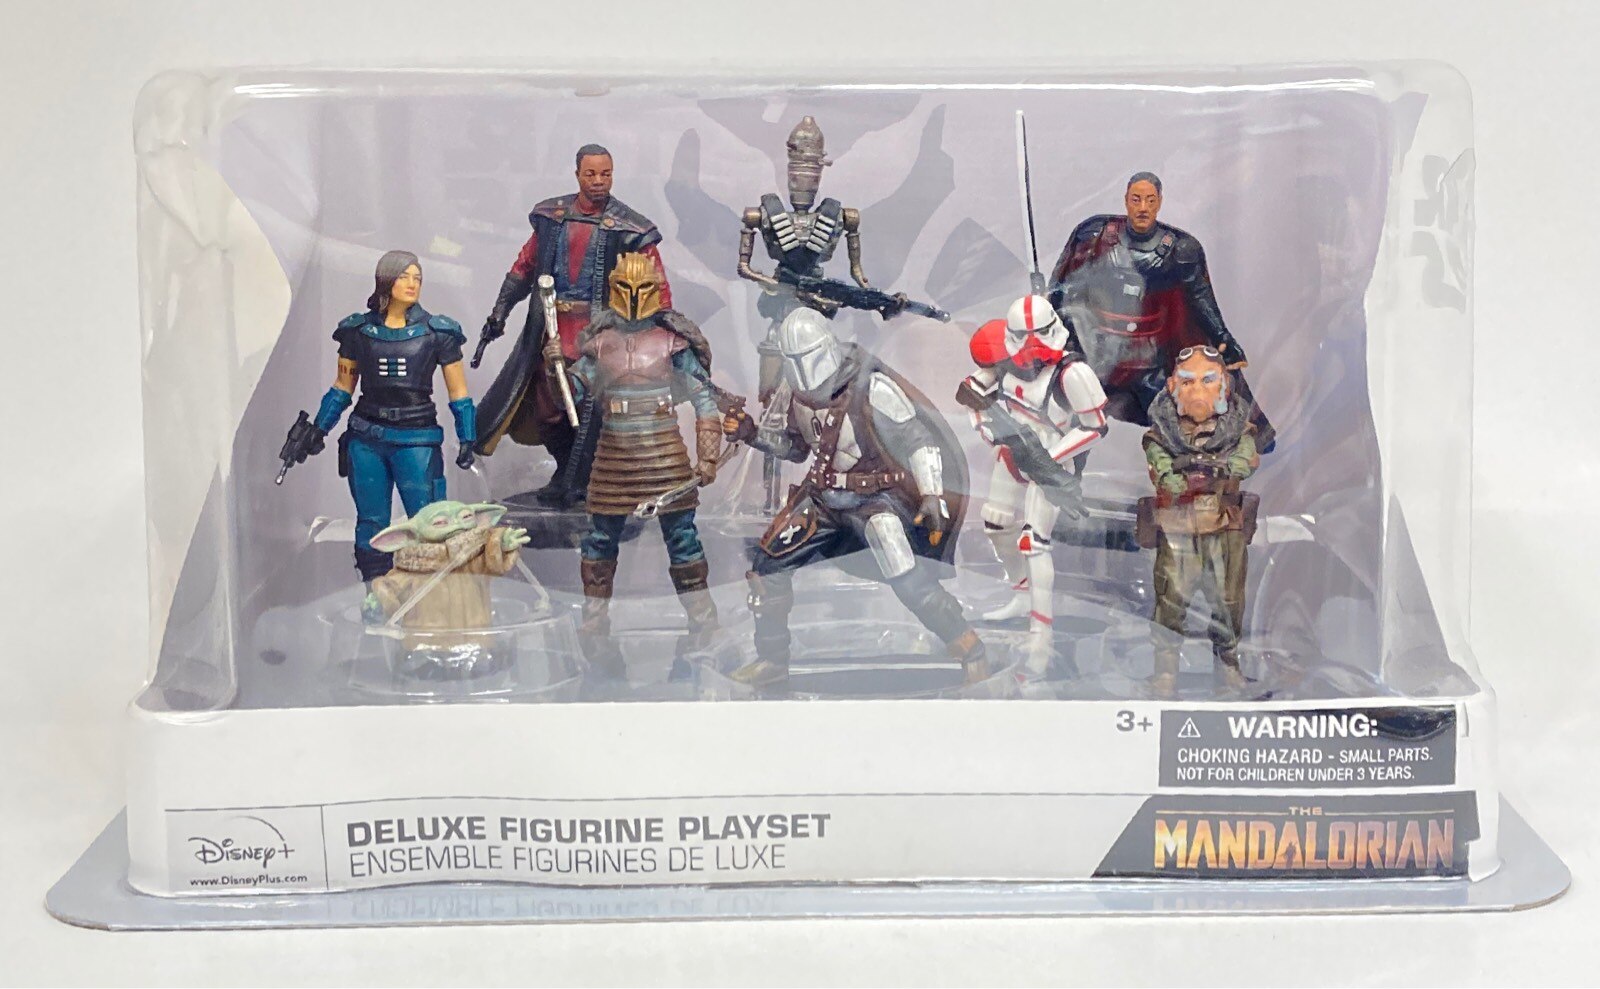 Disney Store The Mandalorian Deluxe Figurine Playset